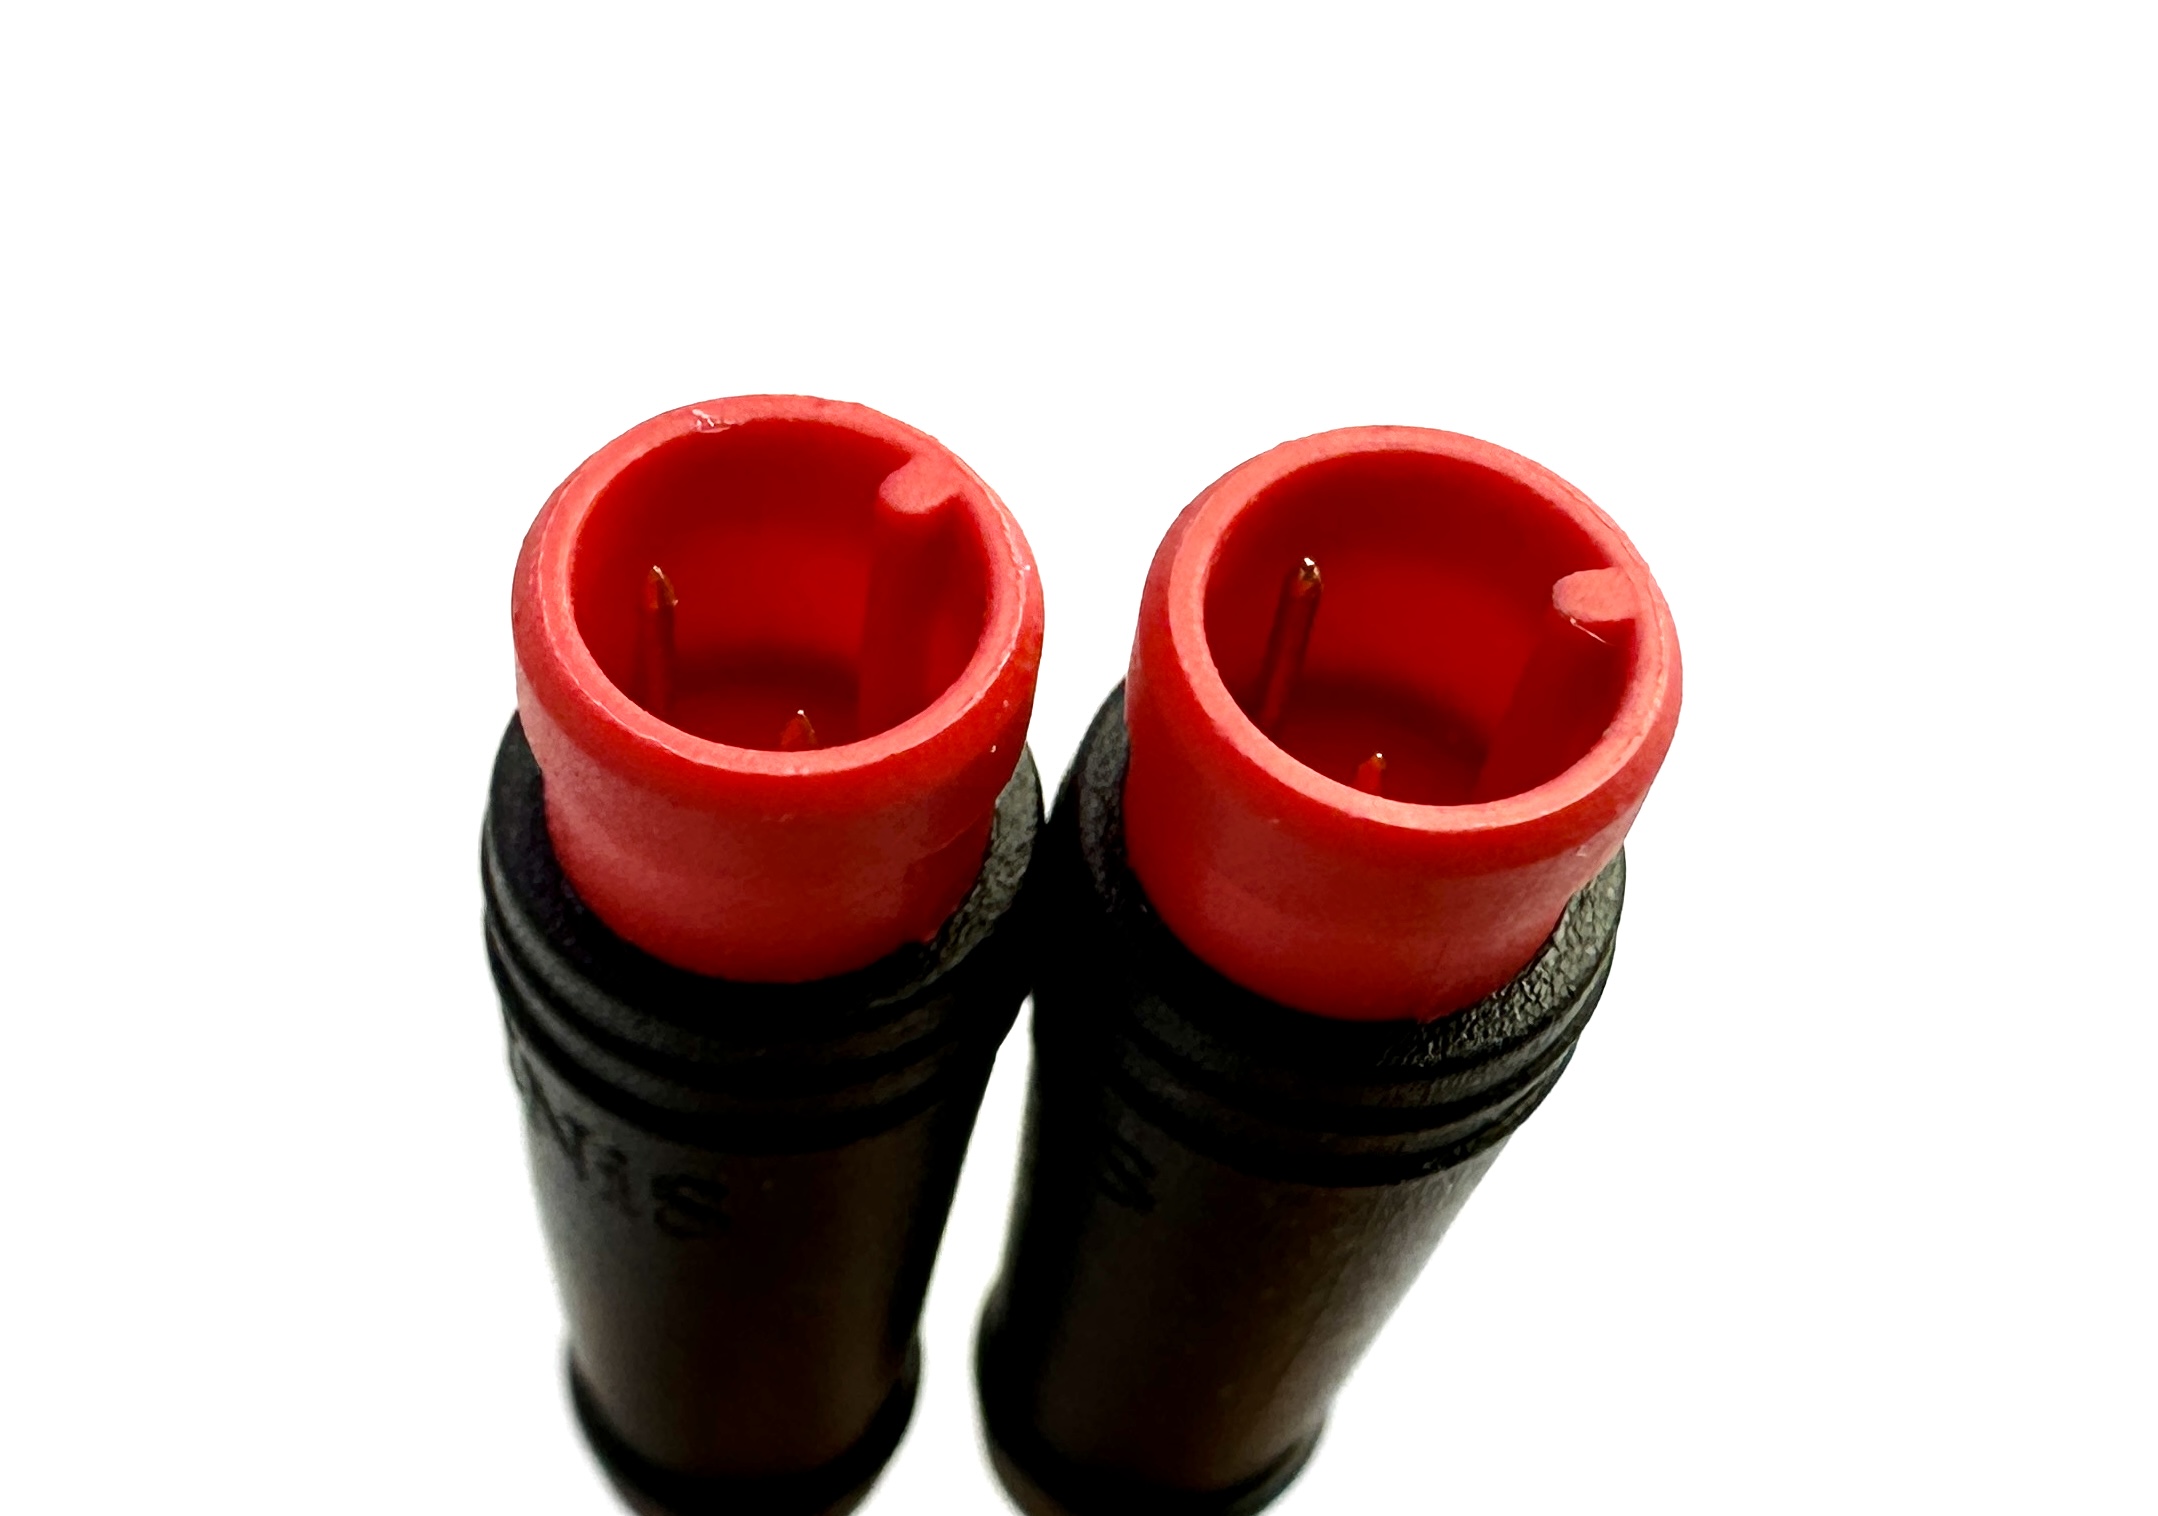 HIGO / Julet cavo adattatore 11 cm per ebike, 2 PIN maschio a maschio, rosso